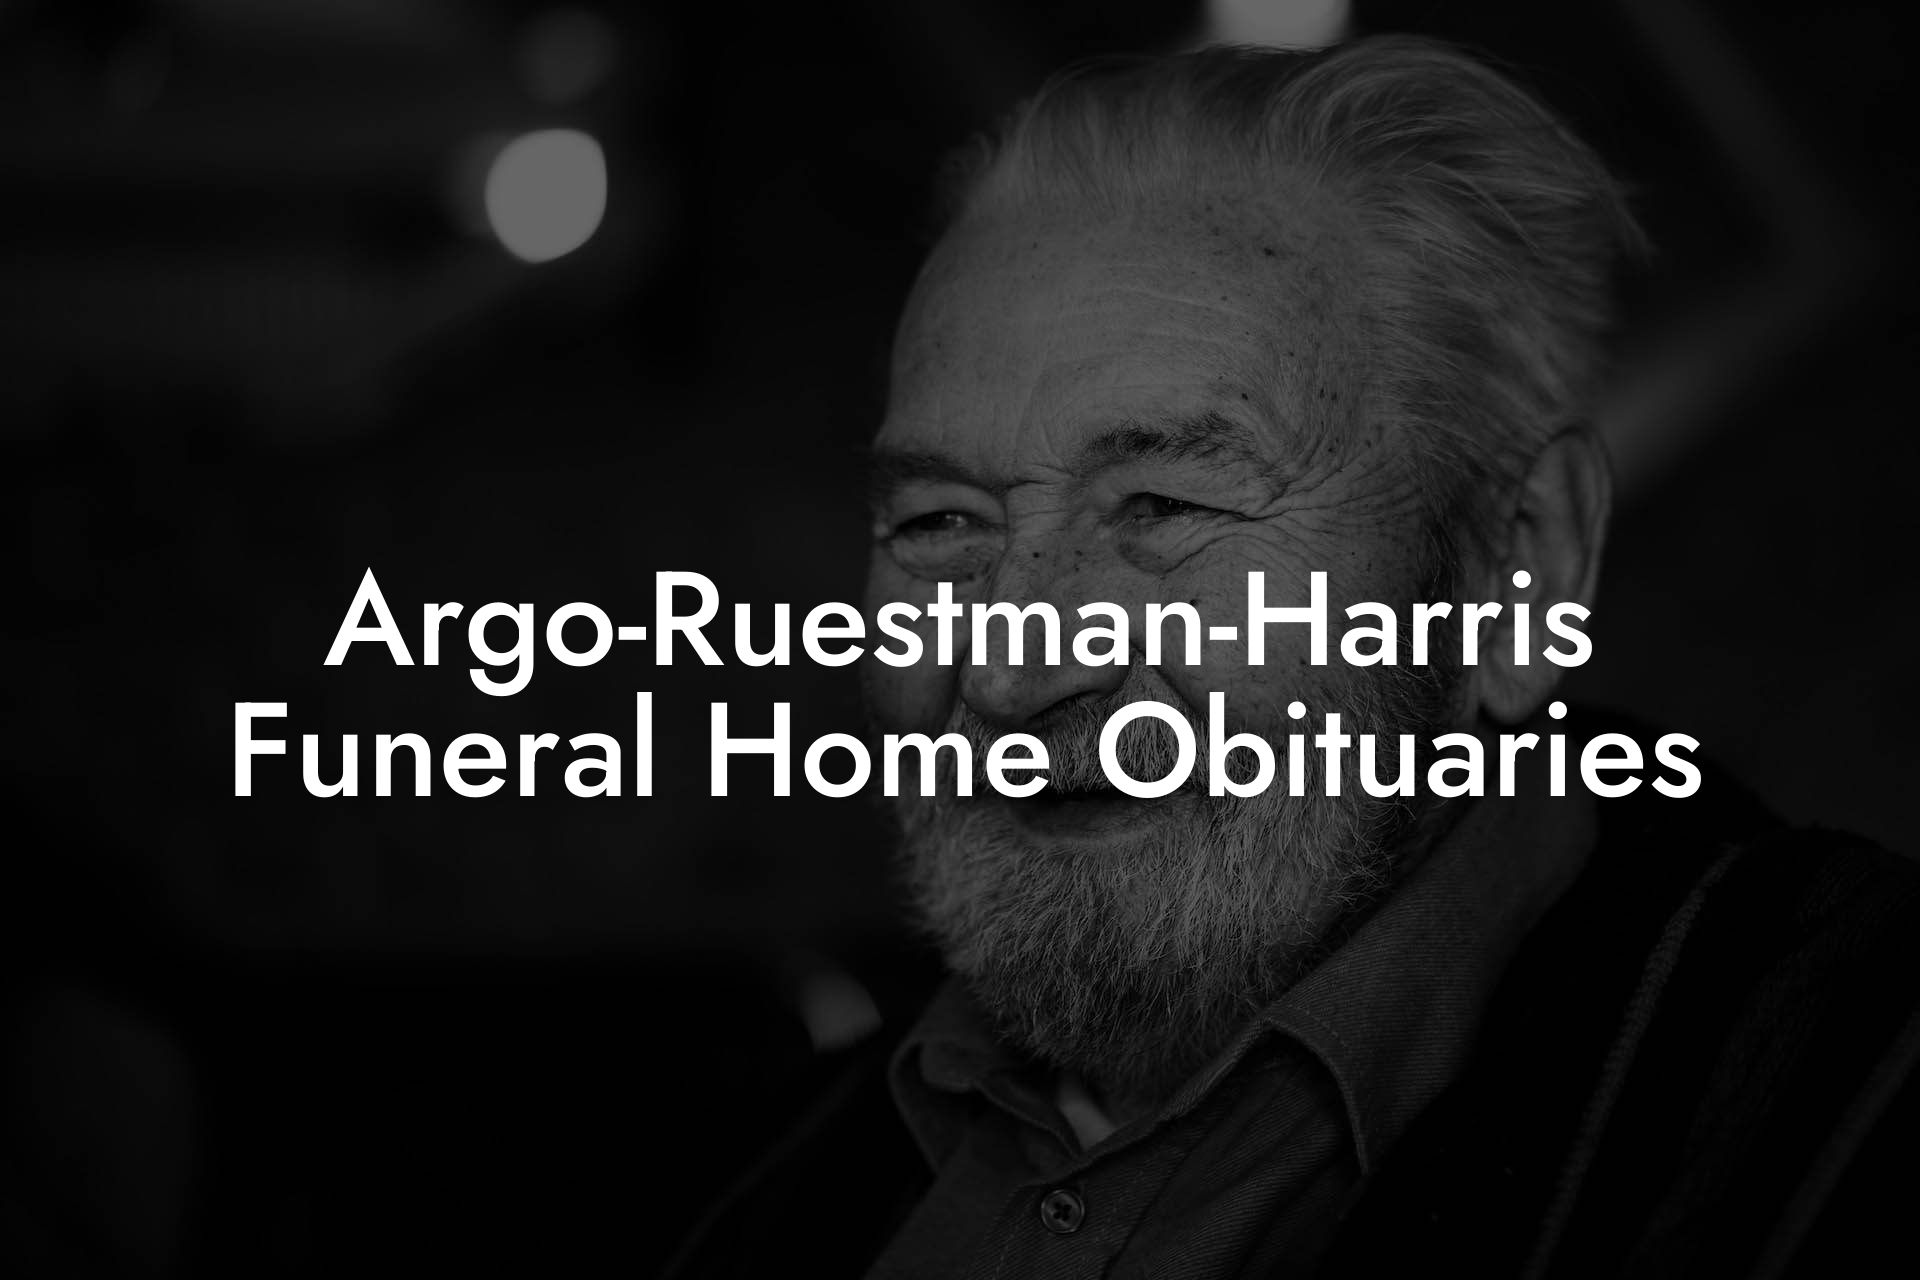 Argo-Ruestman-Harris Funeral Home Obituaries